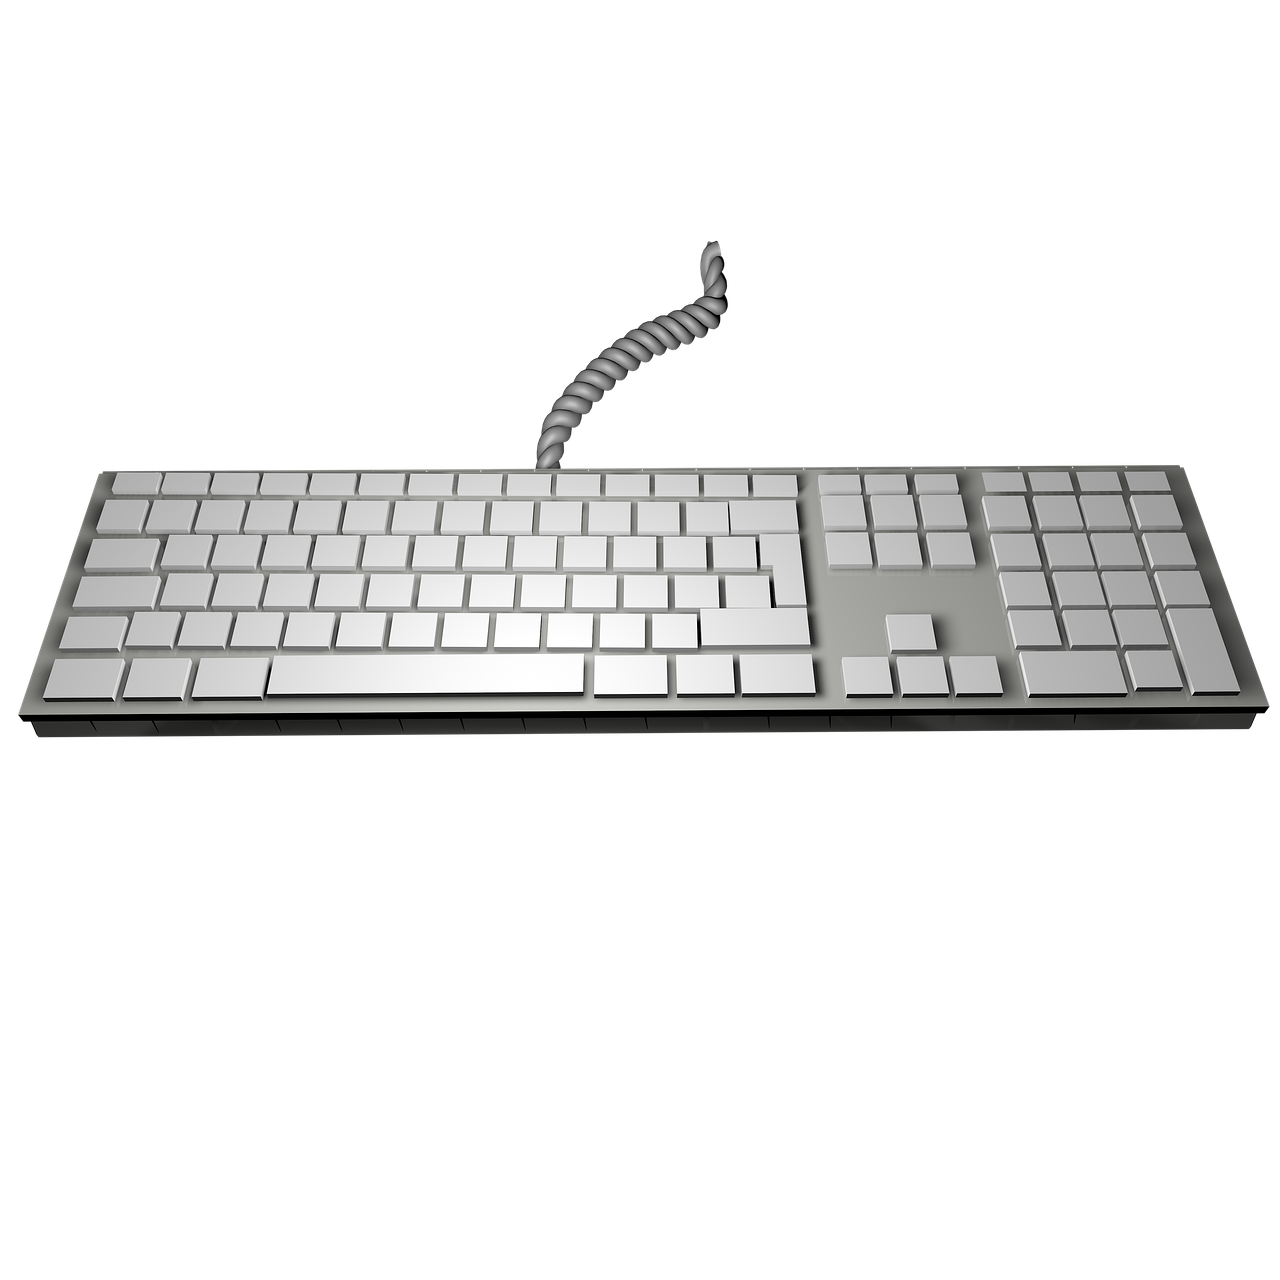 keyboard untitled keys free photo